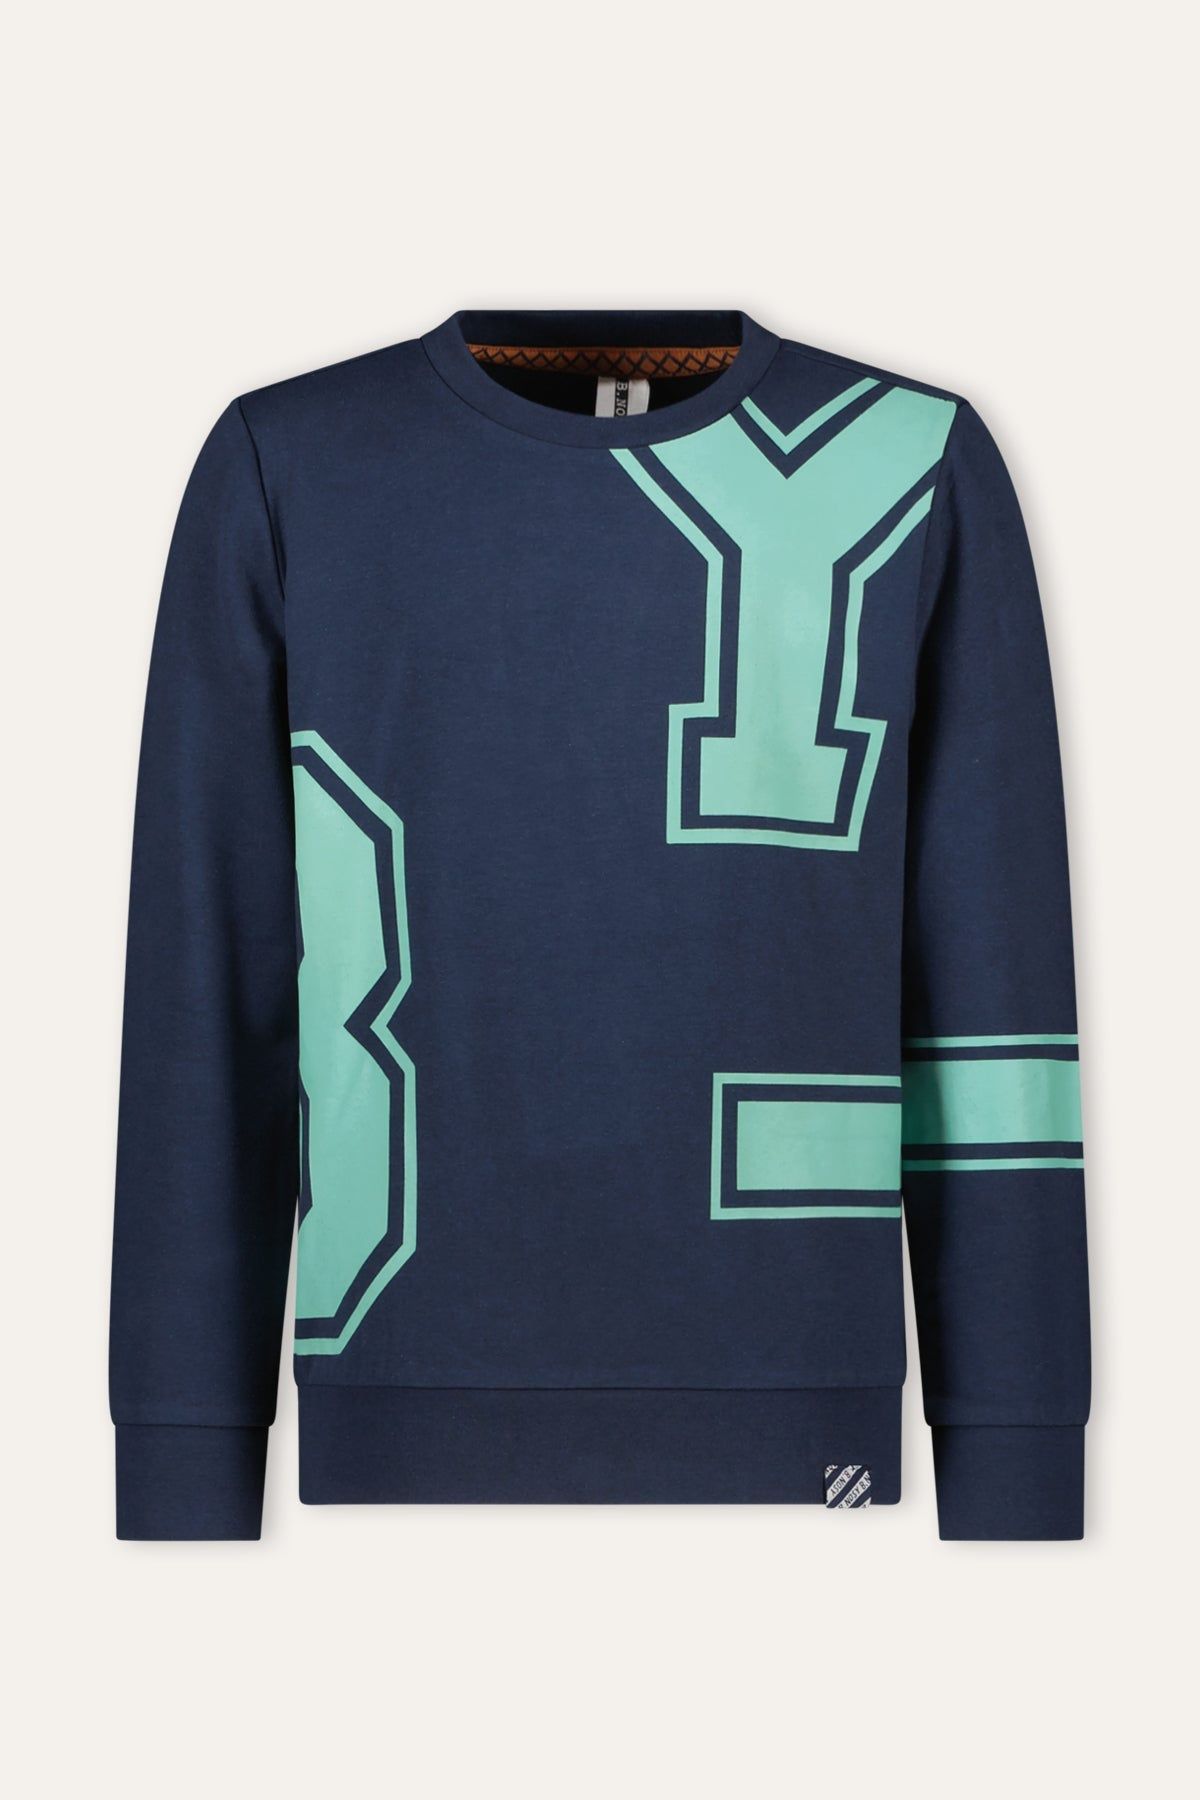 Trui / Sweater Elijah Navy Trui